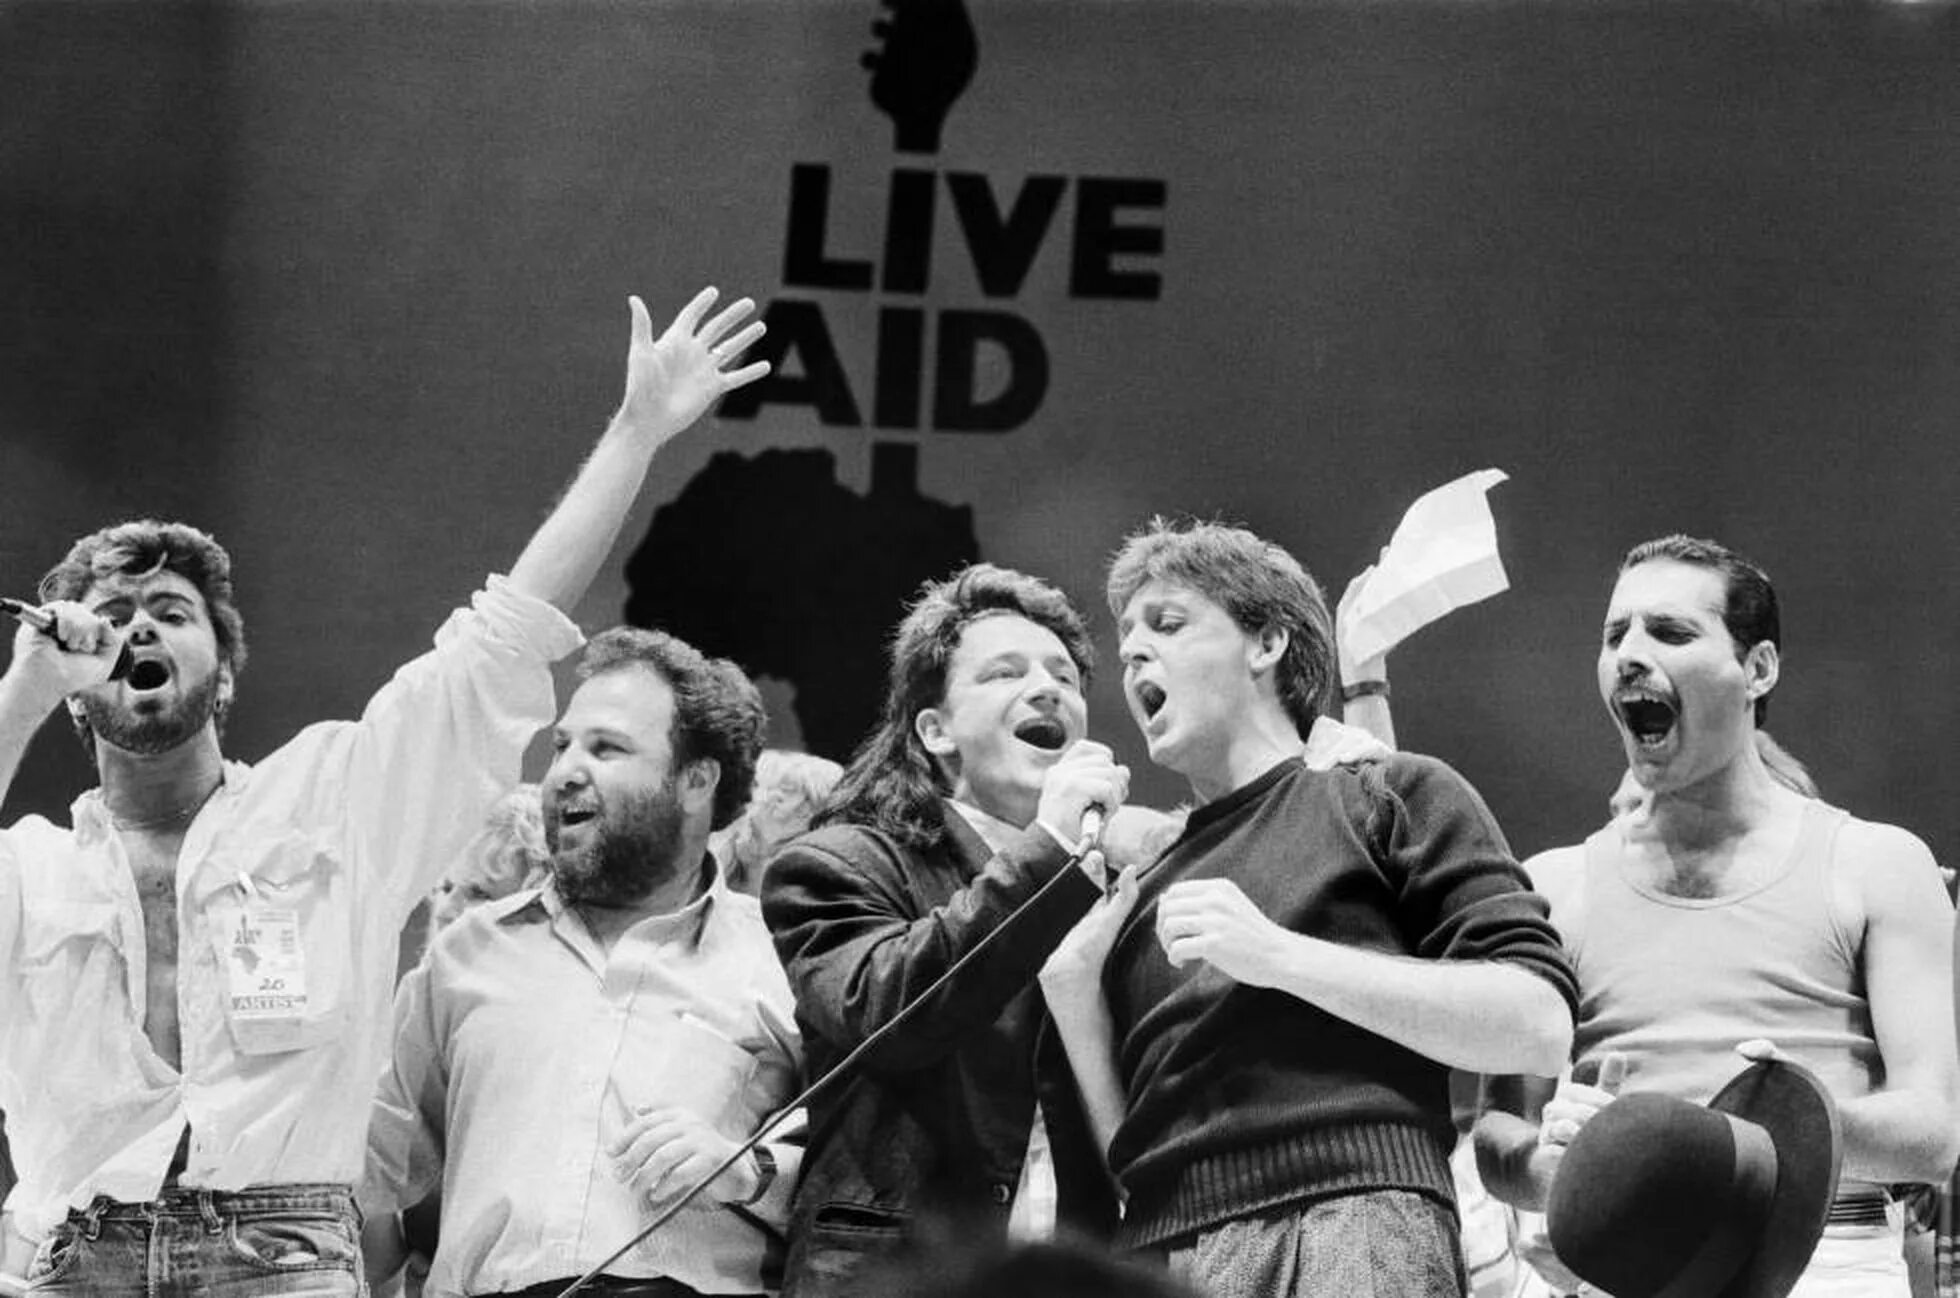 13 июня 1985 года. Квин Live Aid 1985. Концерт Live Aid 1985 Queen. Live Aid 1985 пол Маккартни. Фредди Меркьюри Live Aid 1985.